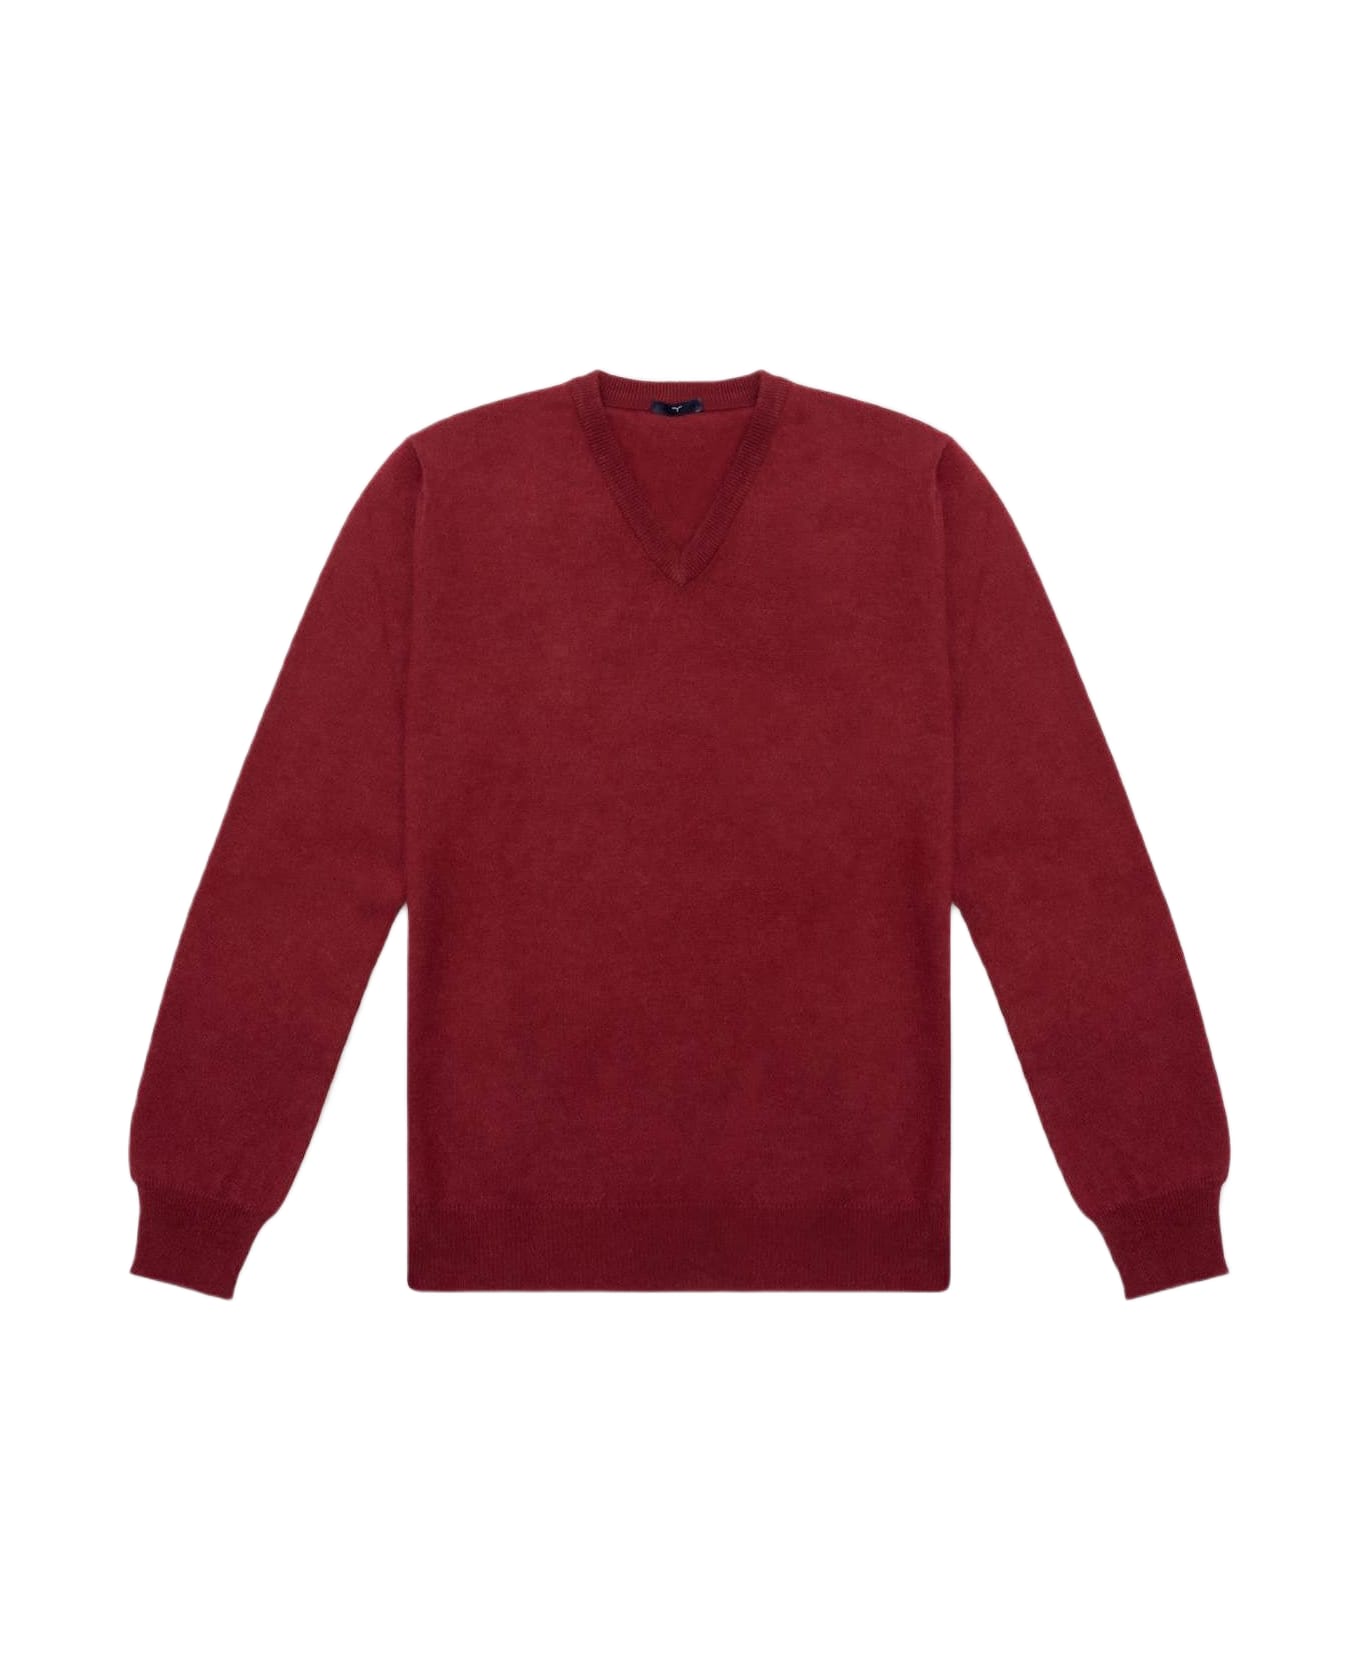 Larusmiani V-neck Sweater Bachelor Sweater - Red